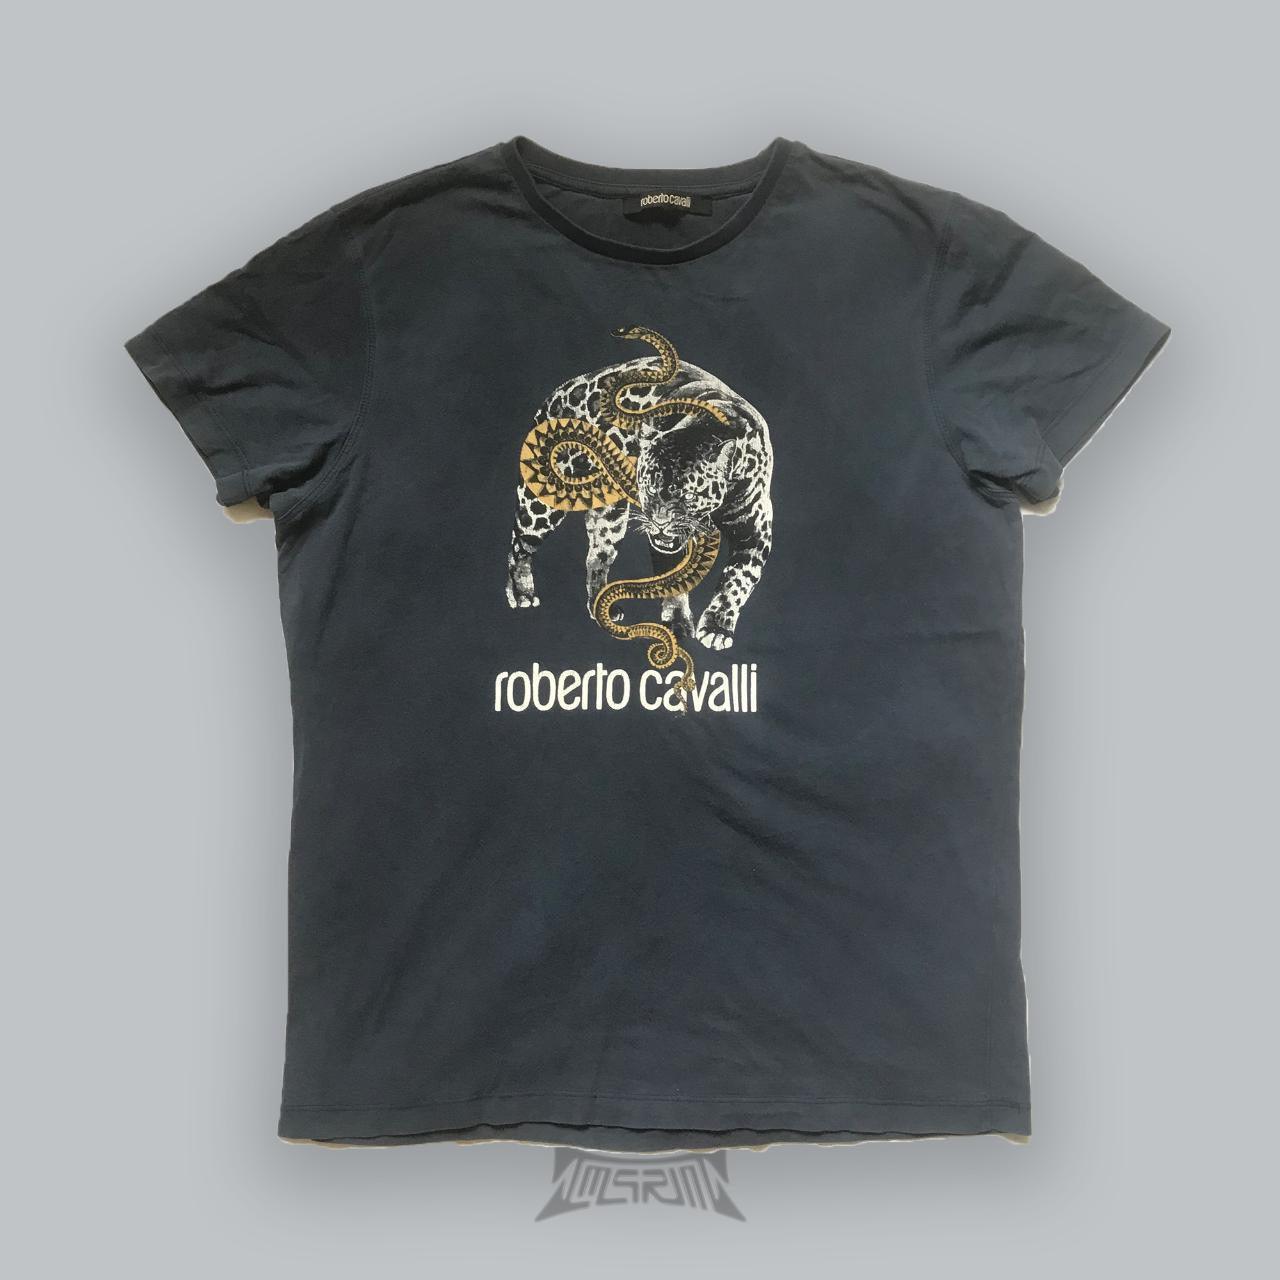 Roberto Cavalli T-Shirt - Known Source